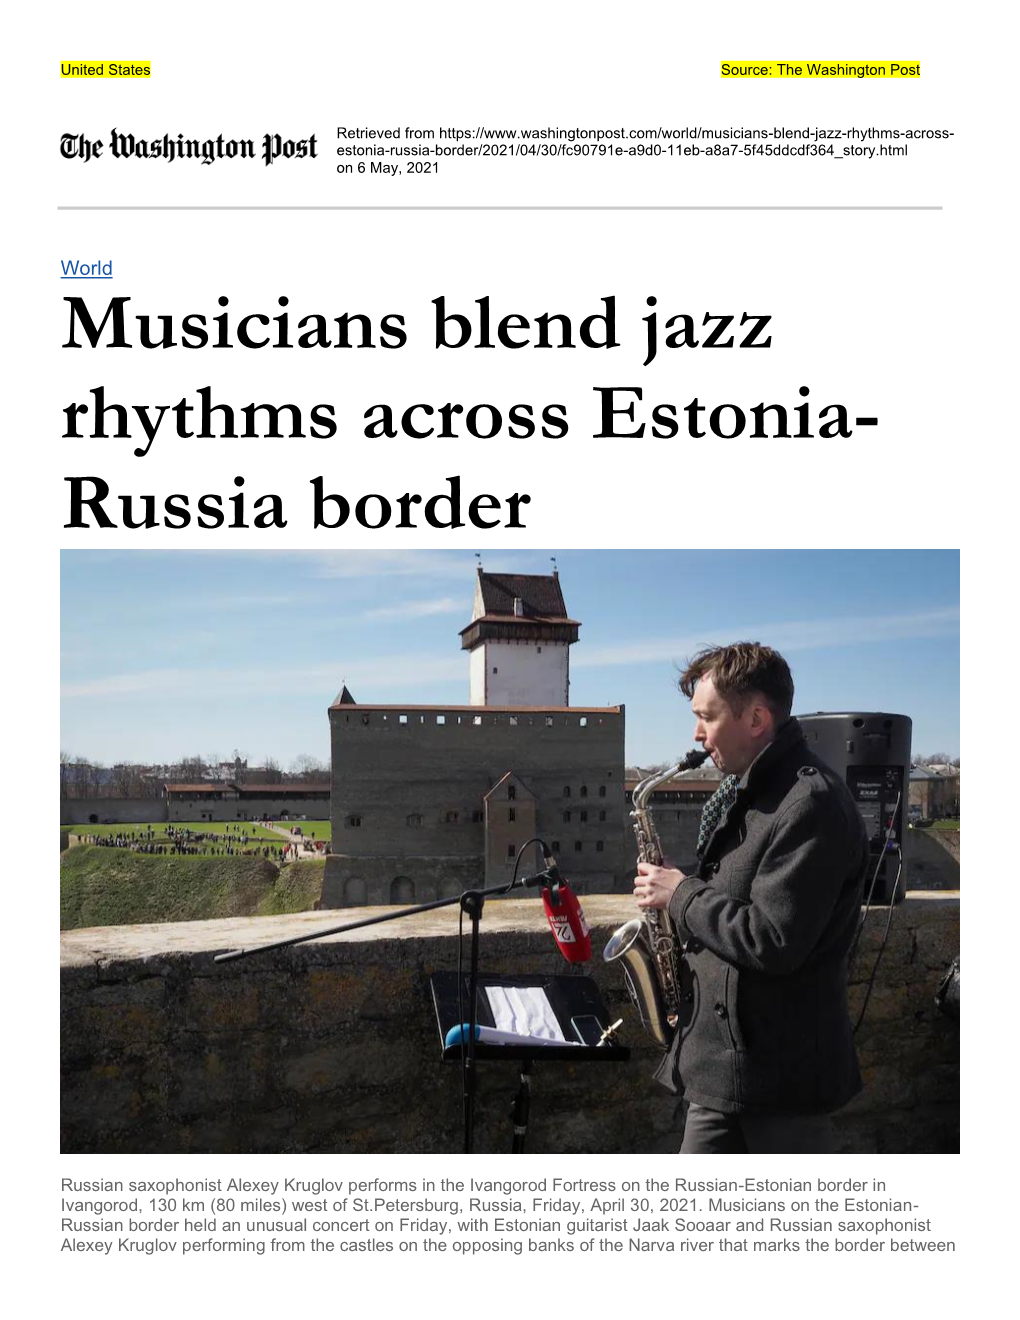 Musicians Blend Jazz Rhythms Across Estonia- Russia Border